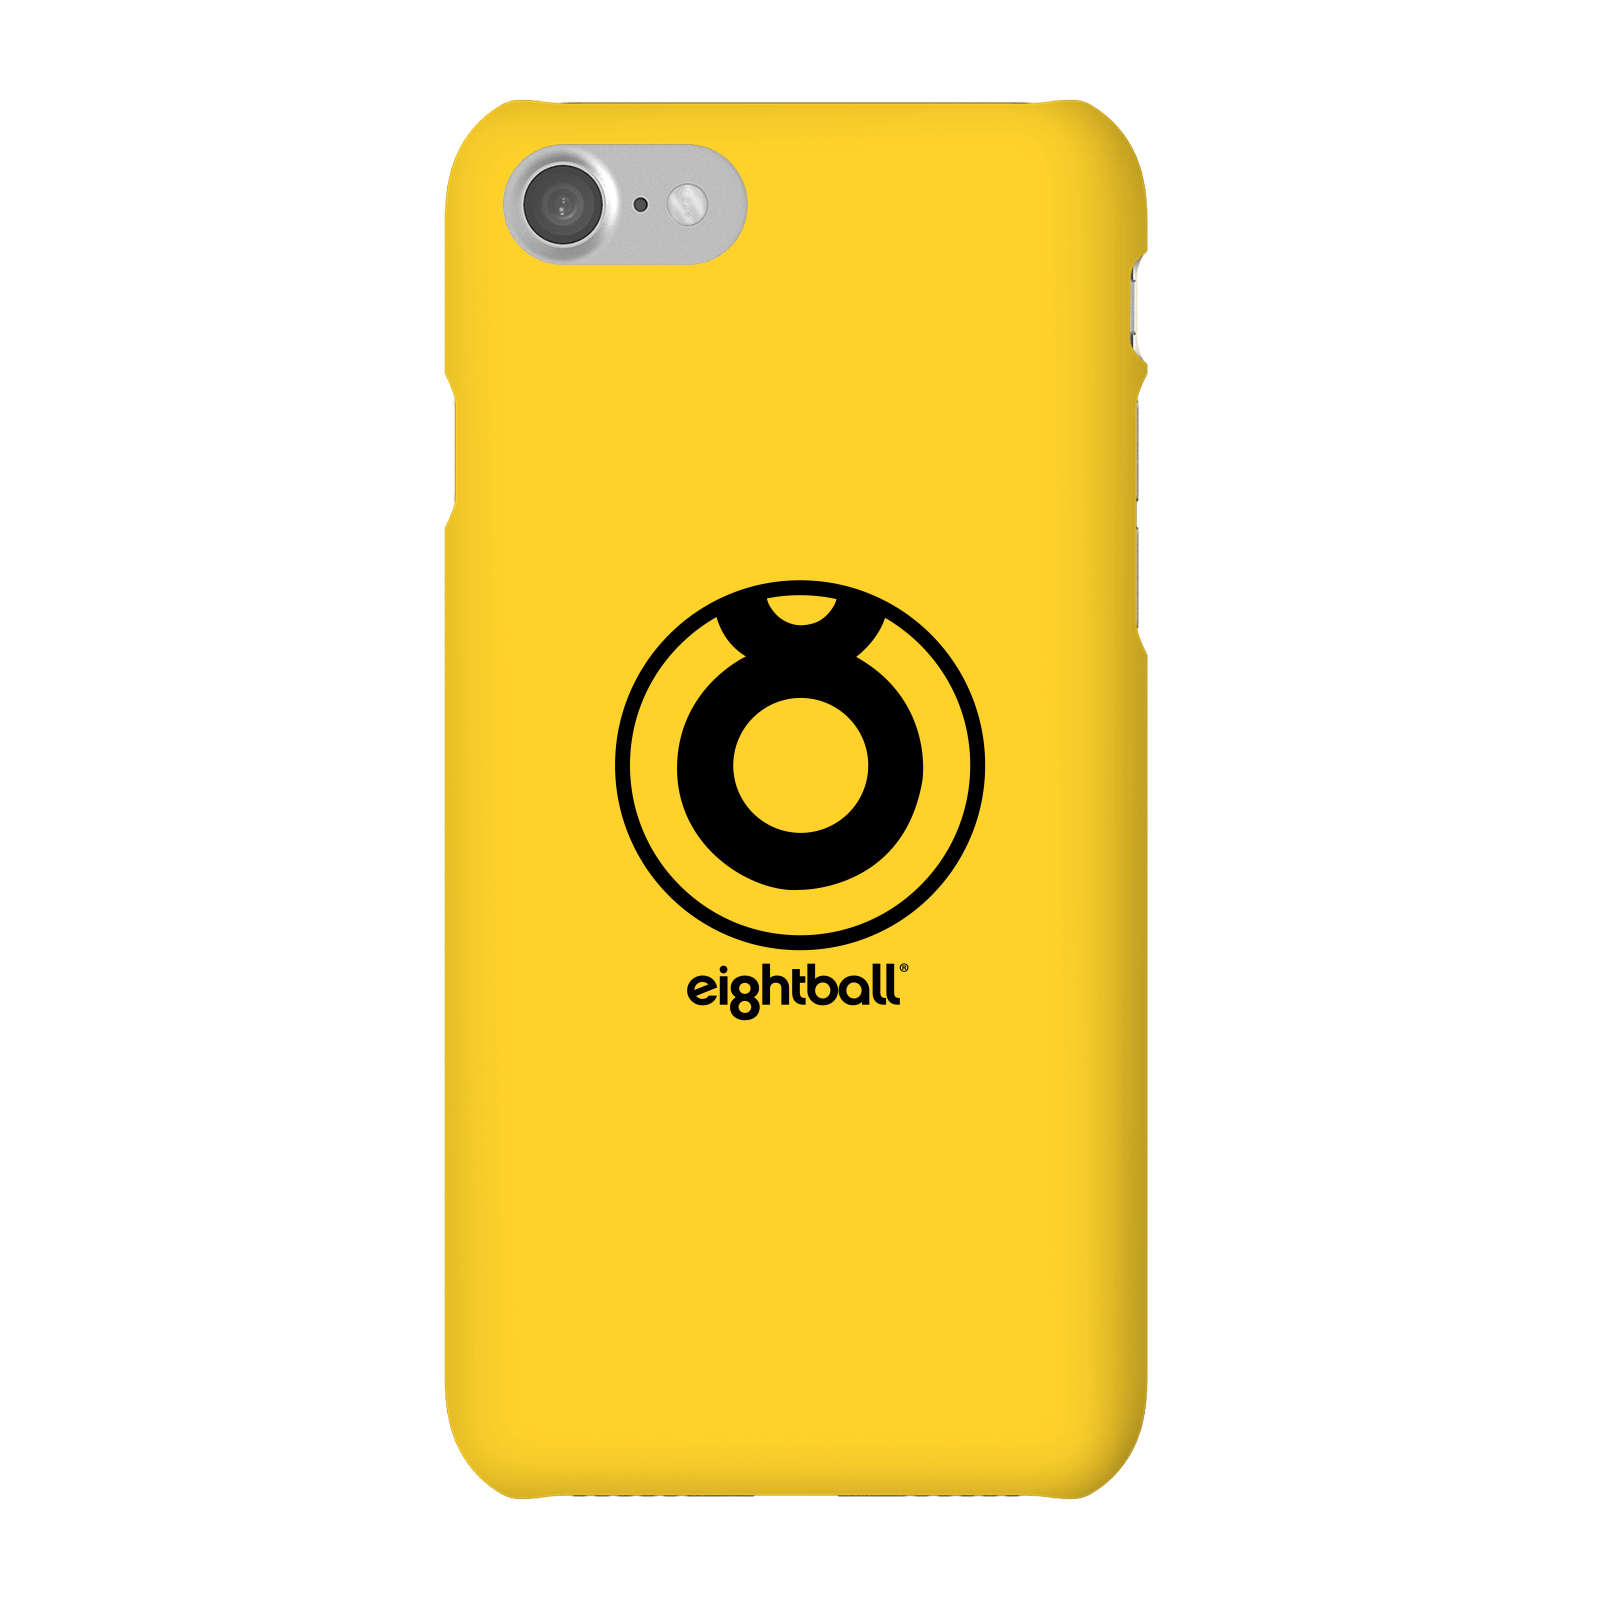 Funda Móvil Ei8htball Large Circle Logo para iPhone y Android - iPhone 7 - Carcasa rígida - Brillante